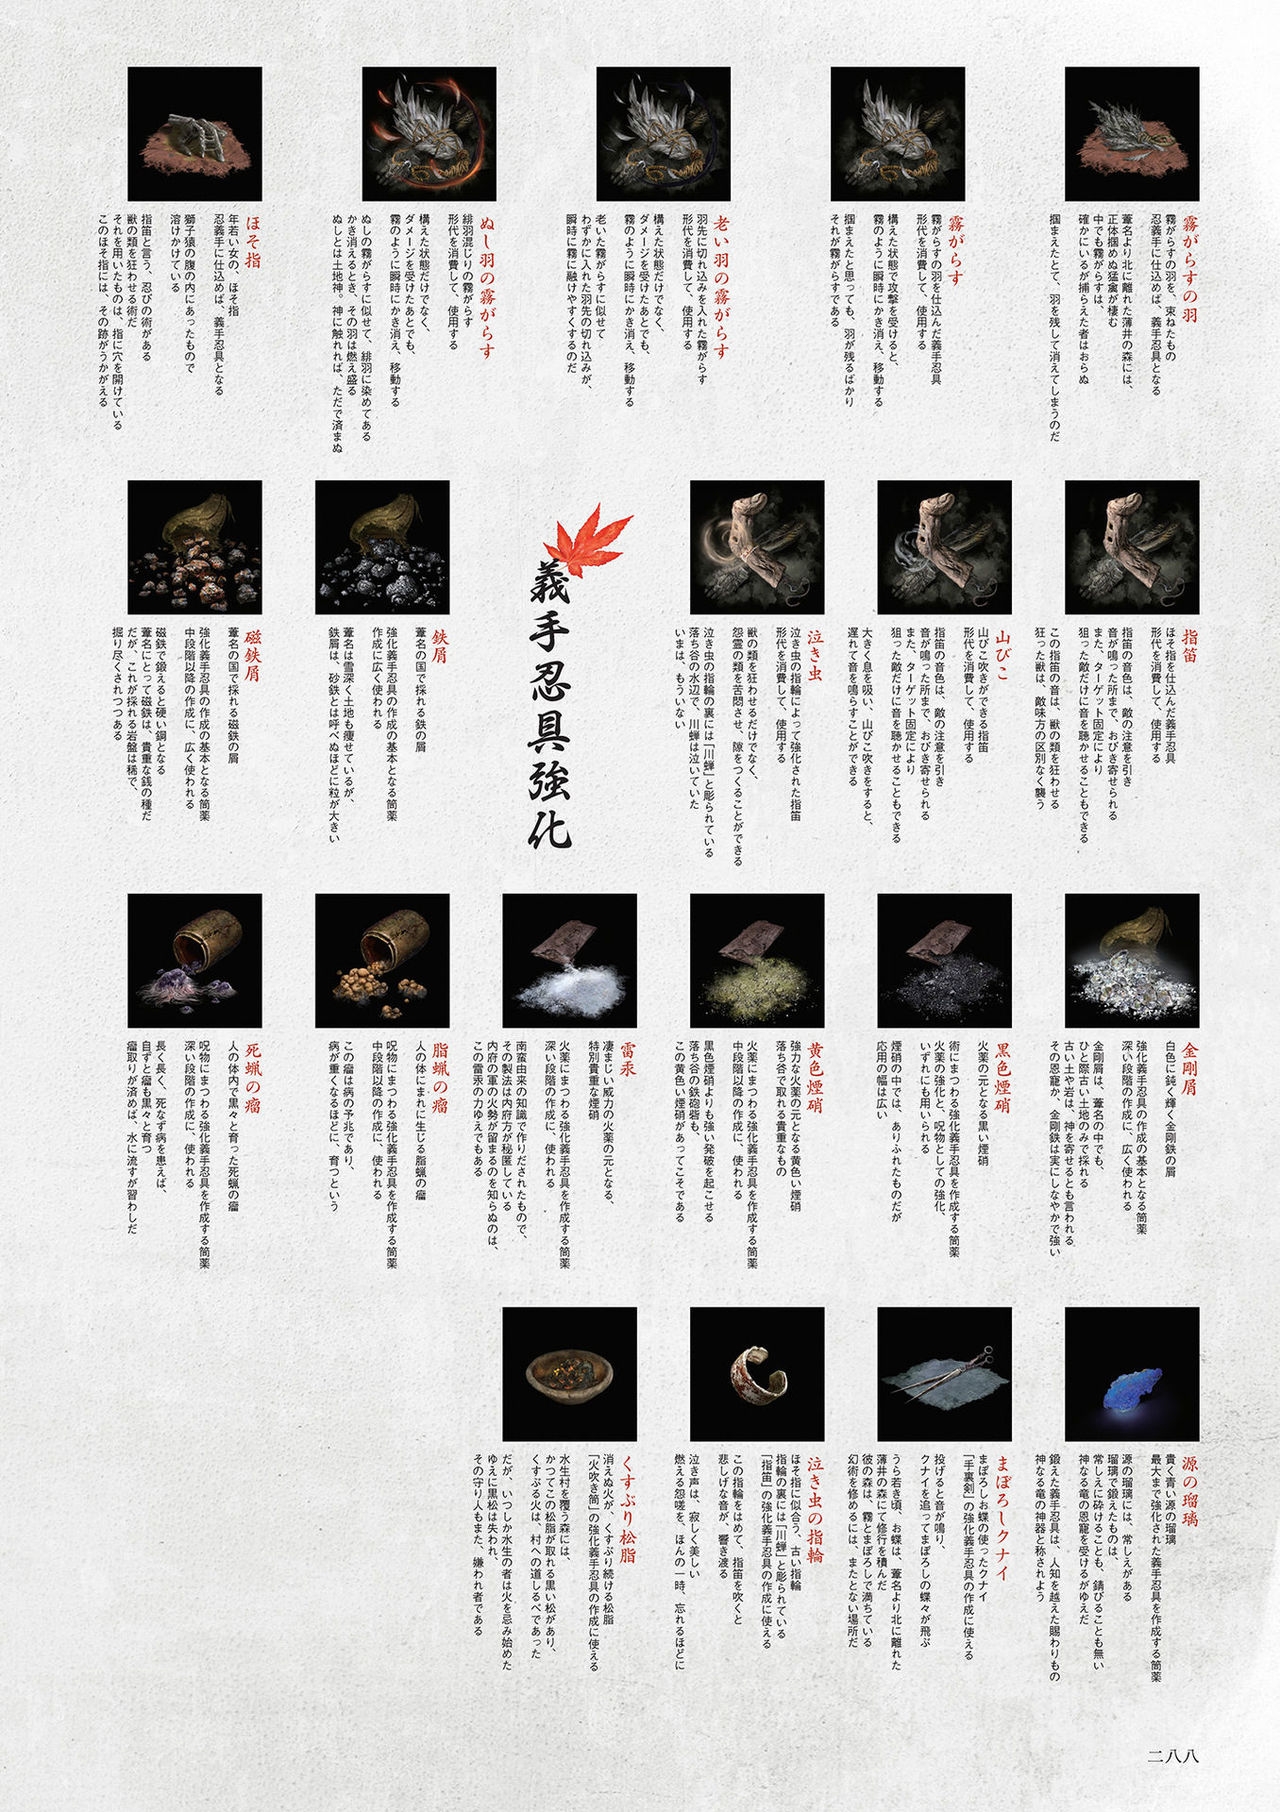 SEKIRO - SHADOWS DIE TWICE Official Artworks 199